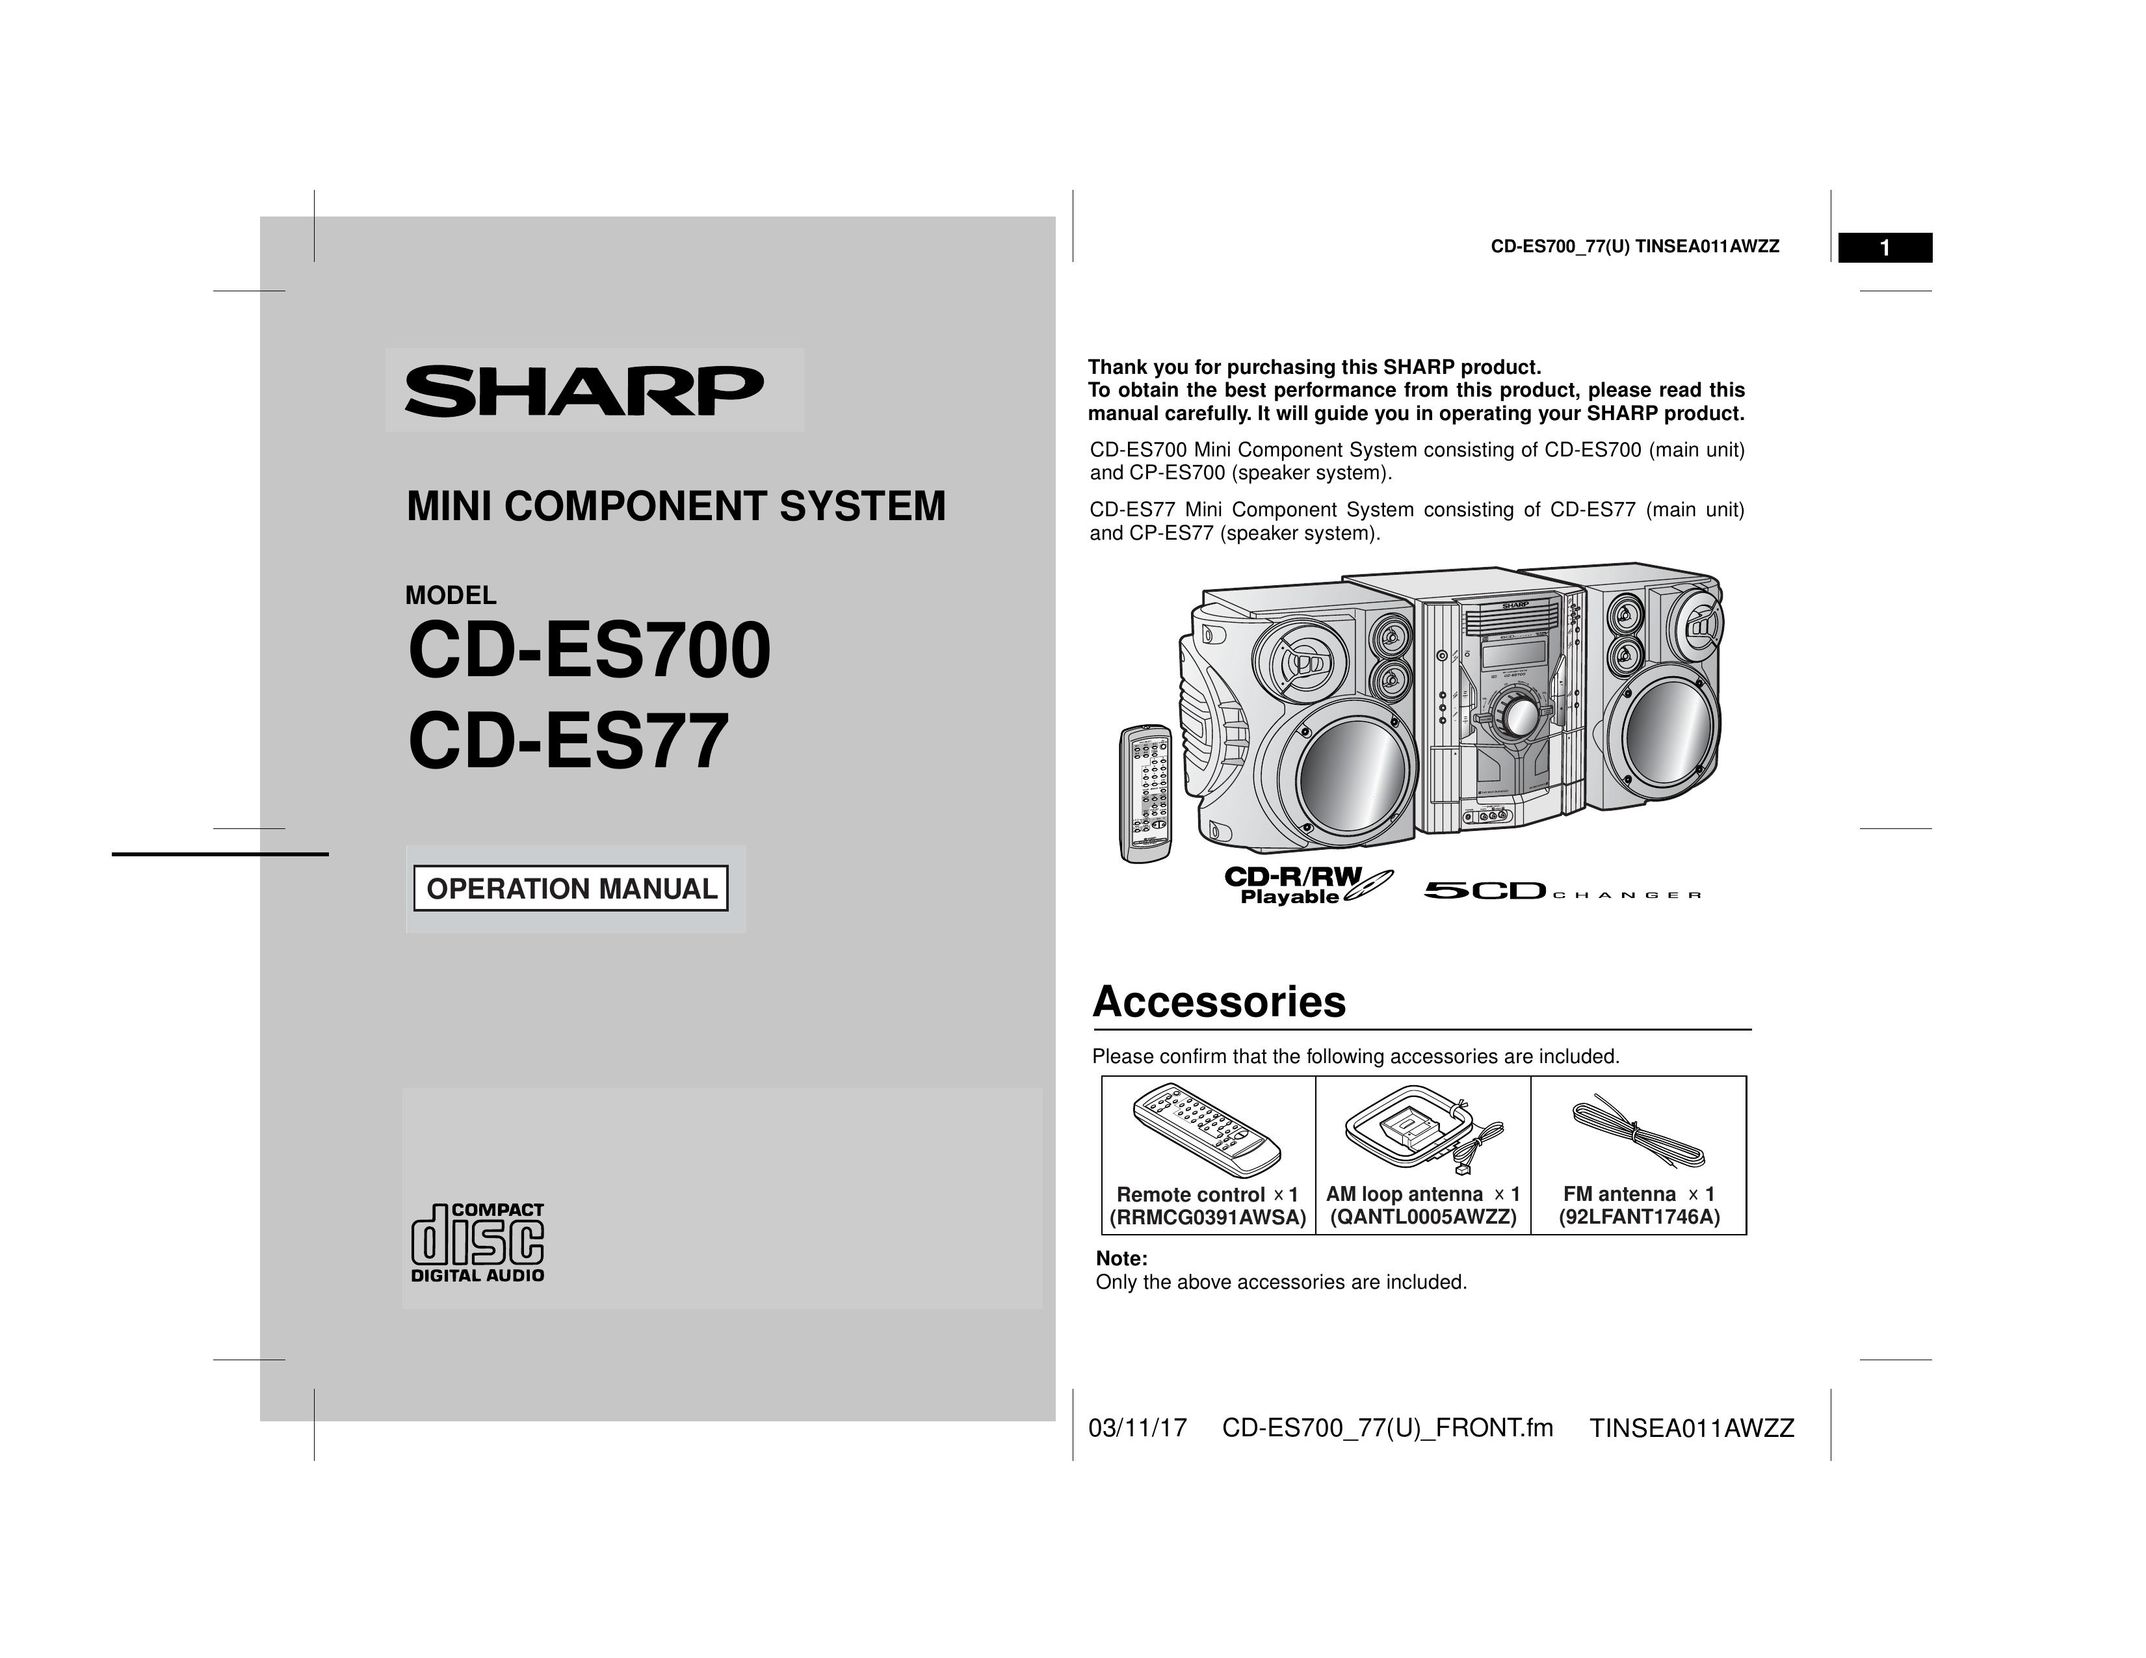 Sharp CD-ES77 Stereo System User Manual